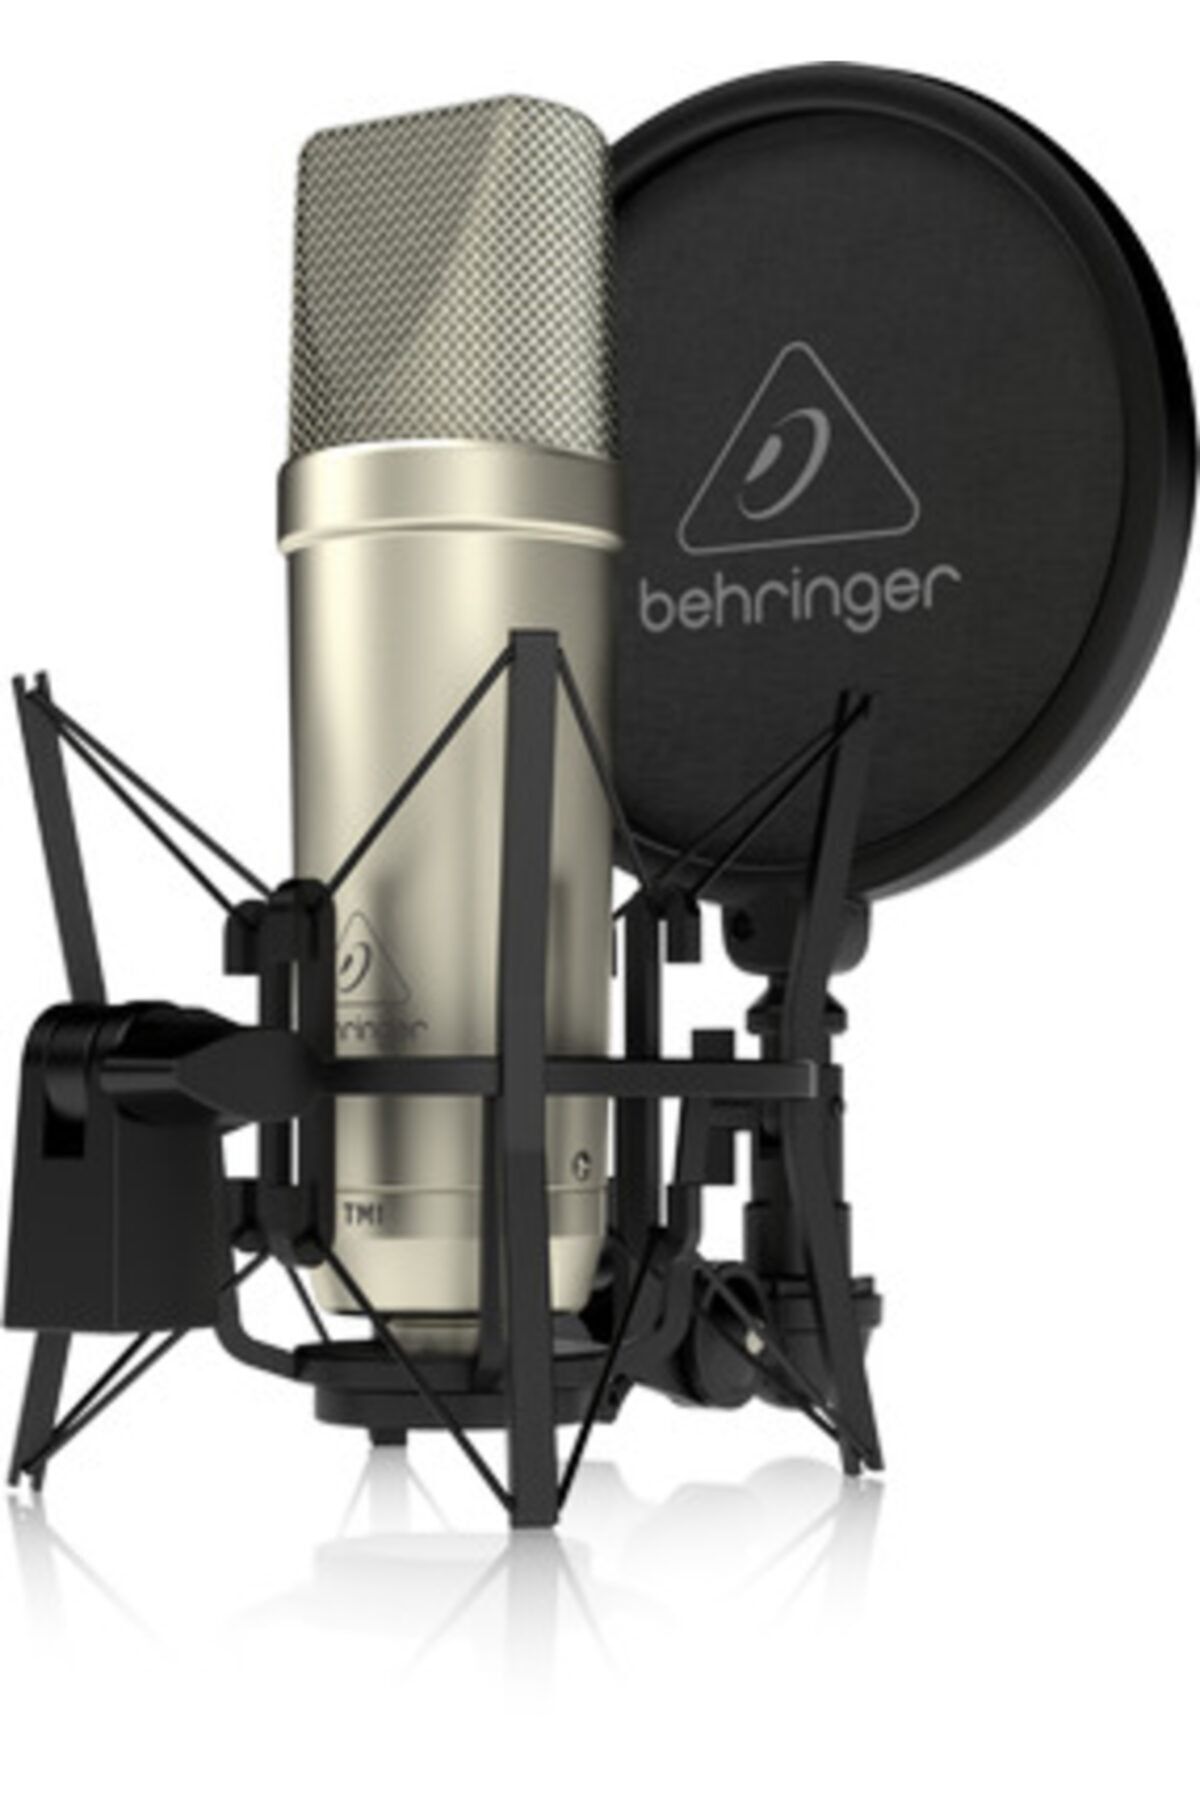 Behringer Tm1 Geniş Diyafram Stüdyo Condenser Mikrofon